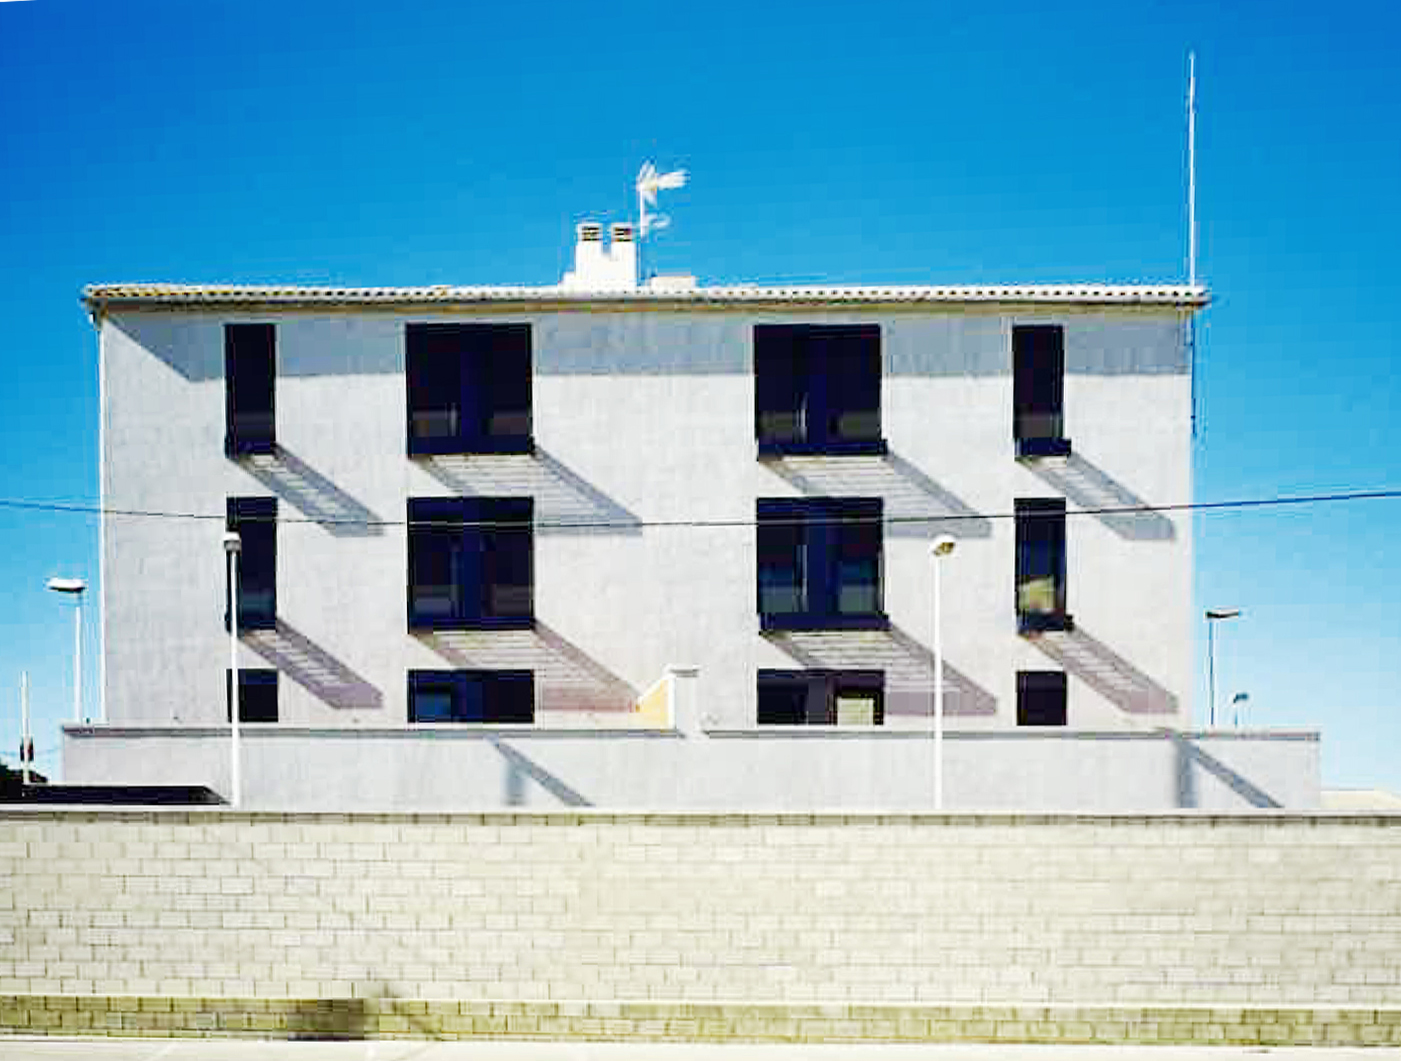 Guardia Civil barracks